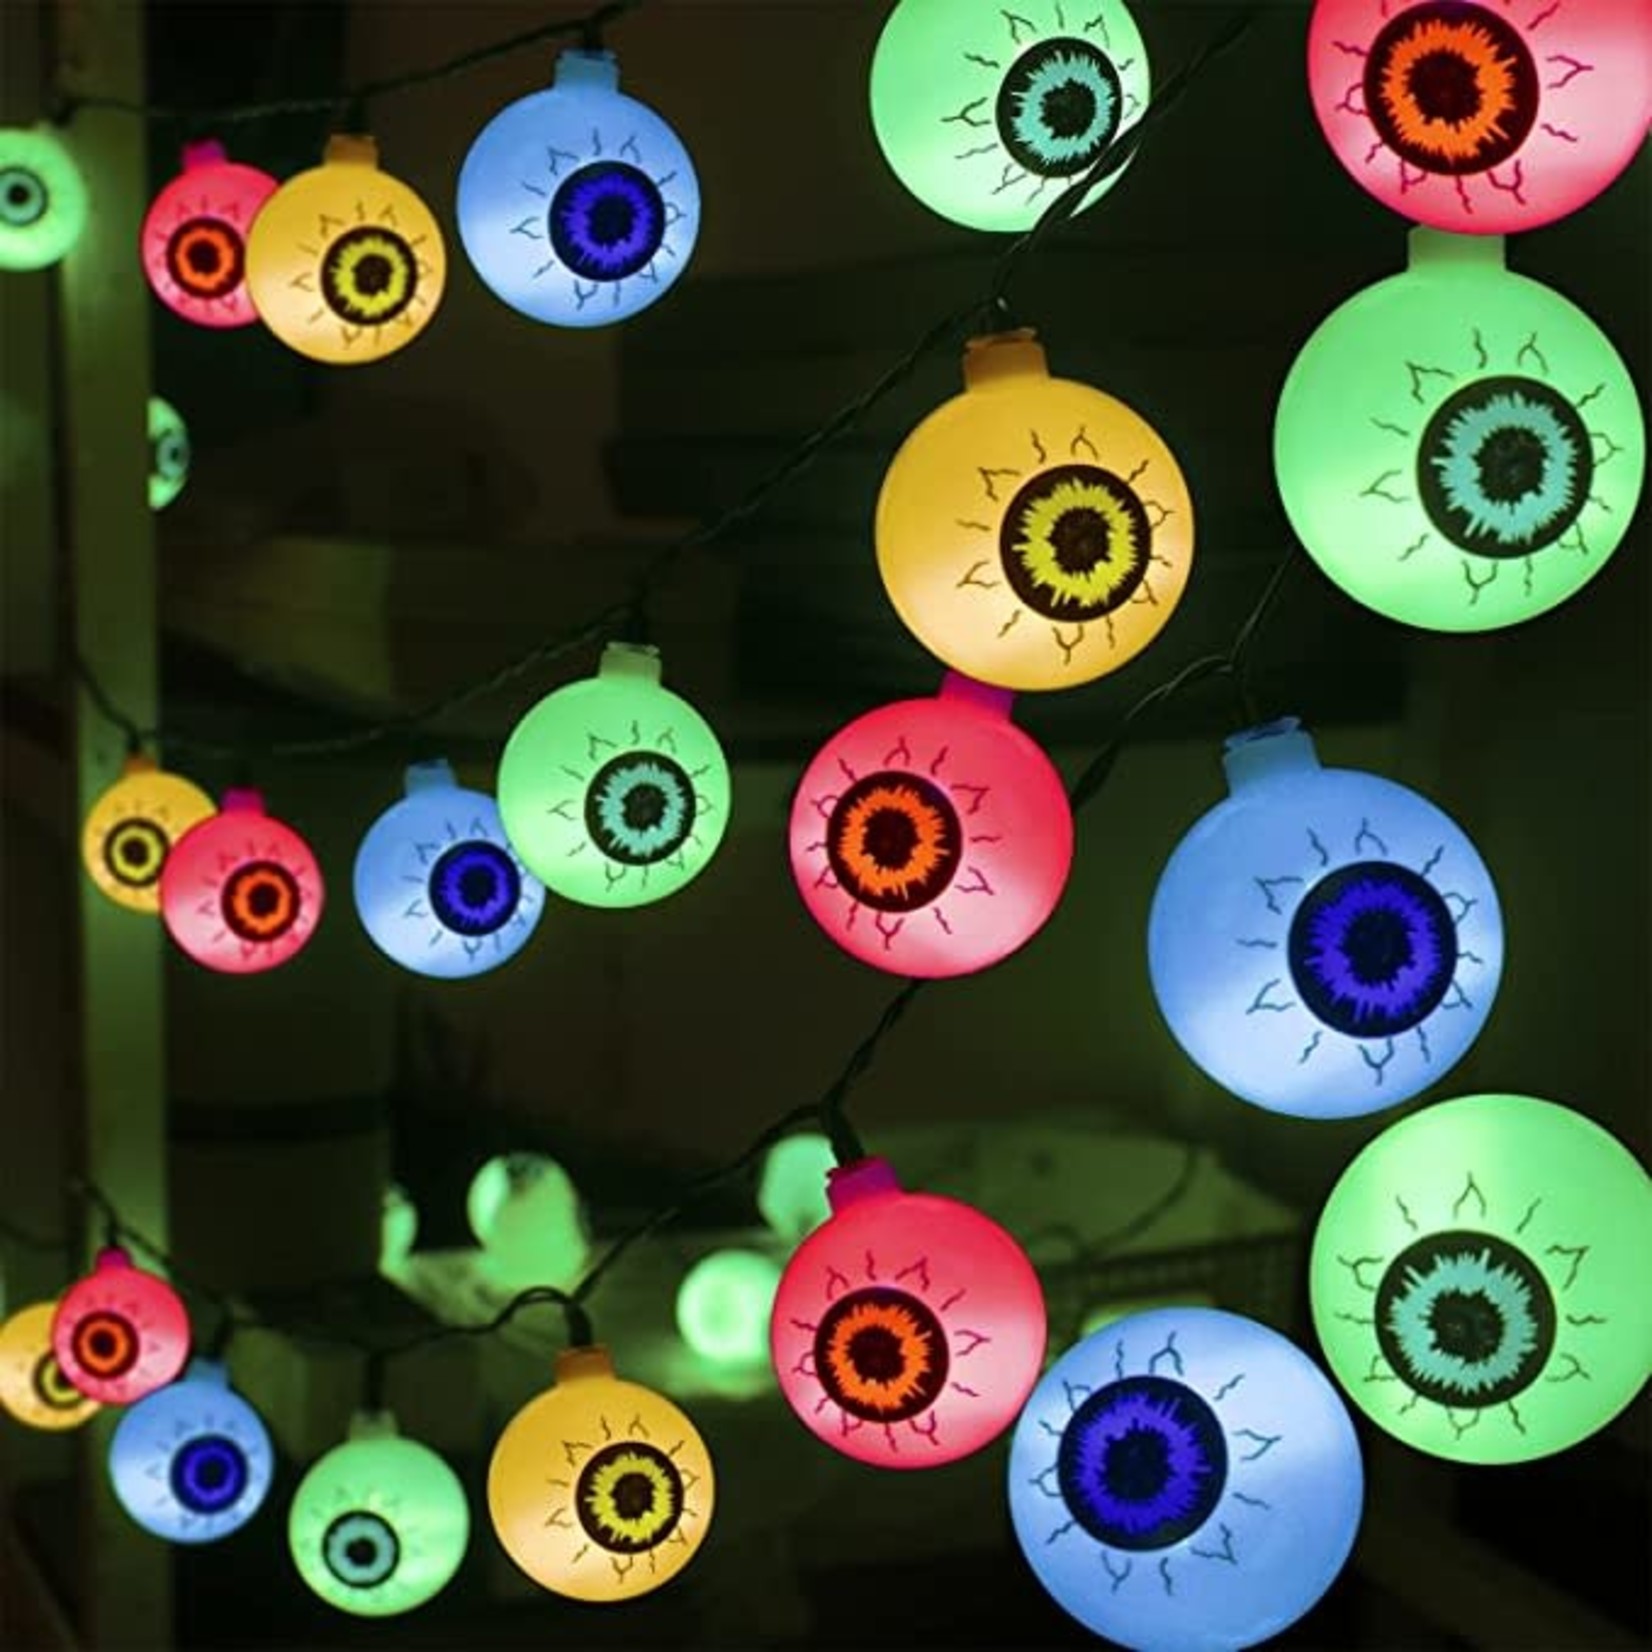 Oolaloo Eyeball Halloween Led String Lights (Multicolor)